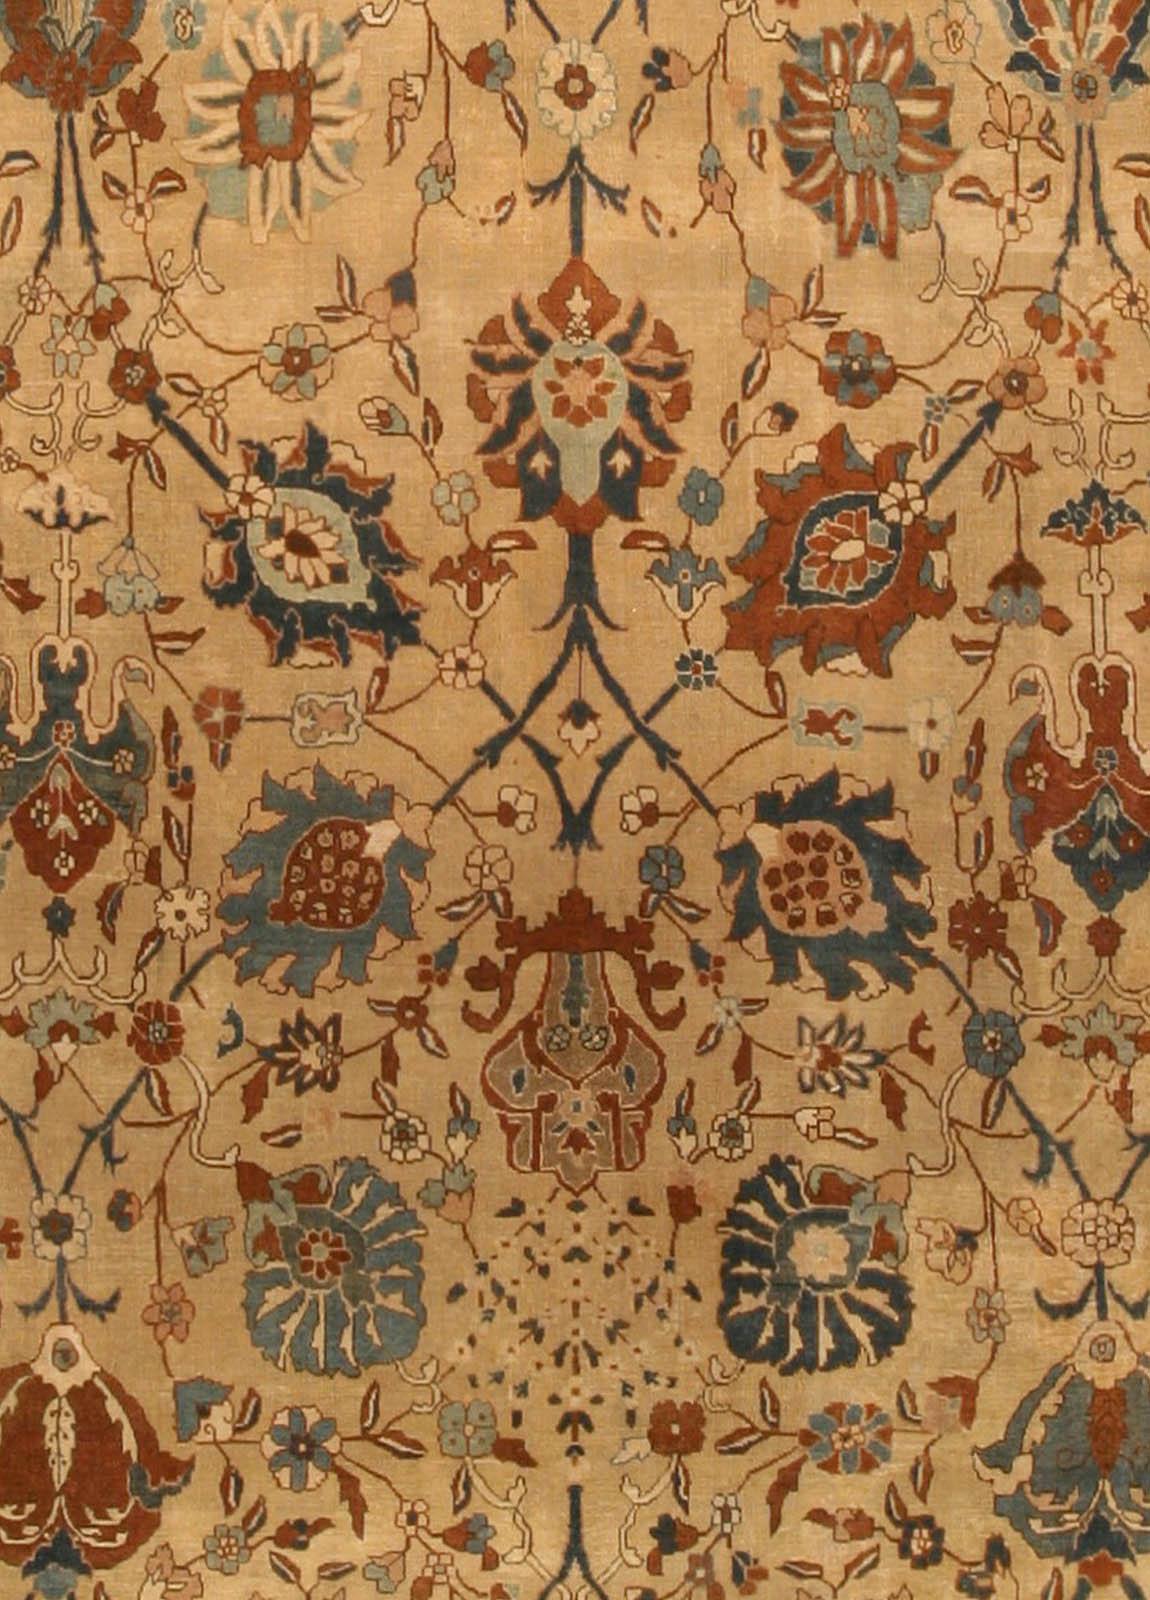 Extra large antique Persian Tabriz handmade rug.
Size: 15'10